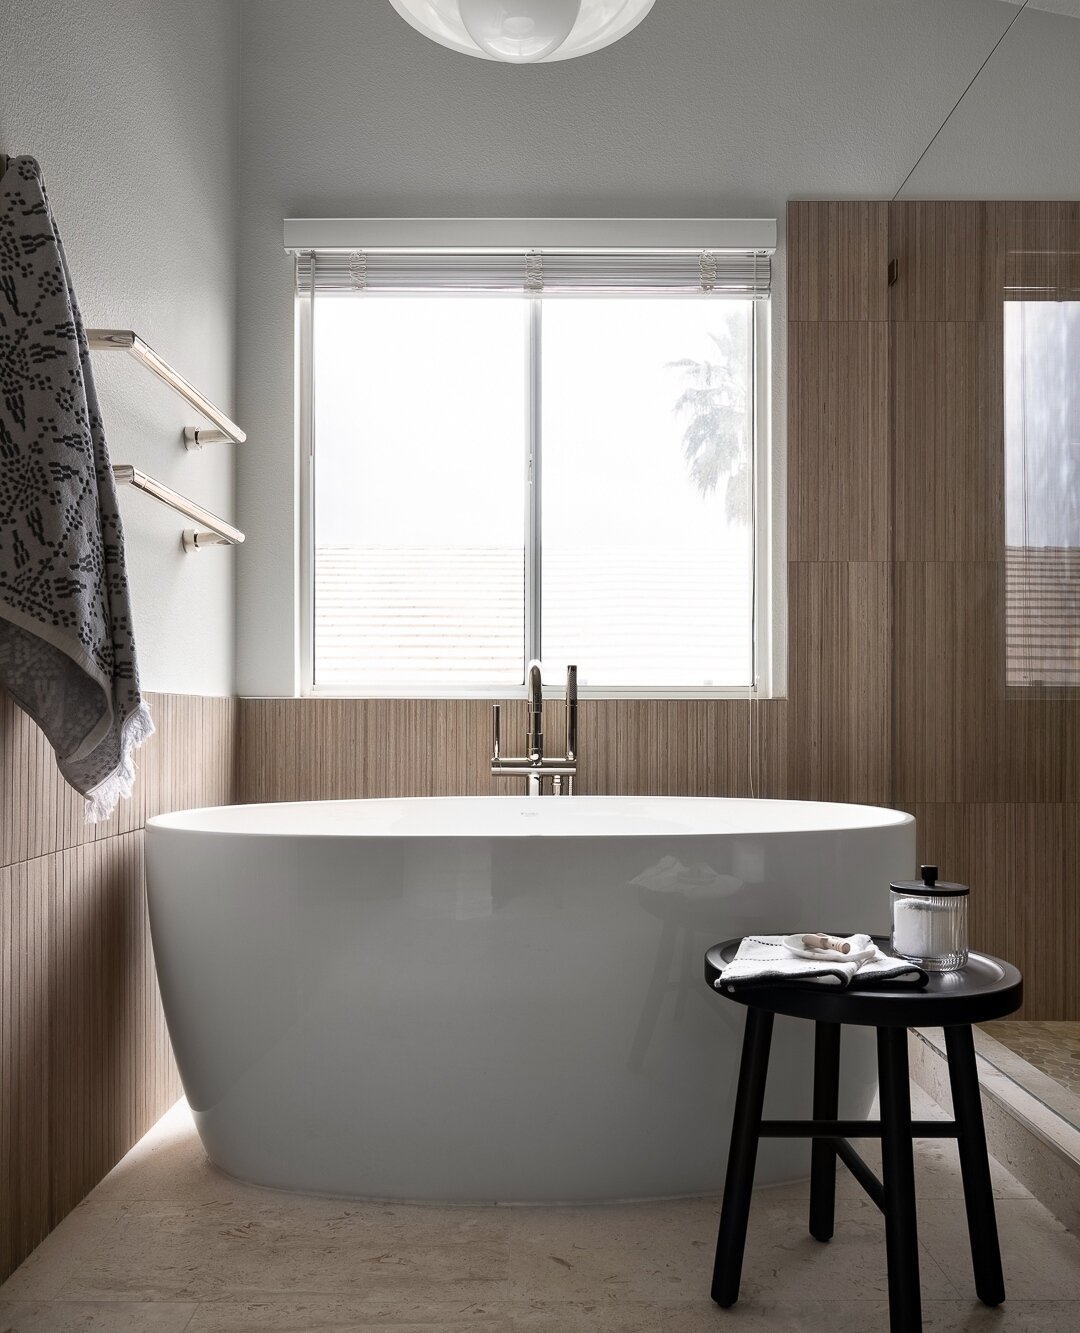 ✨ Transforming your Monday blues into a dreamy spa retreat! 🤎💦 🛁 #LuxuryLiving #BathroomGoals⁠
⁠
Design: @thesevenhome⁠
Photo: @jamesfurman.interiors